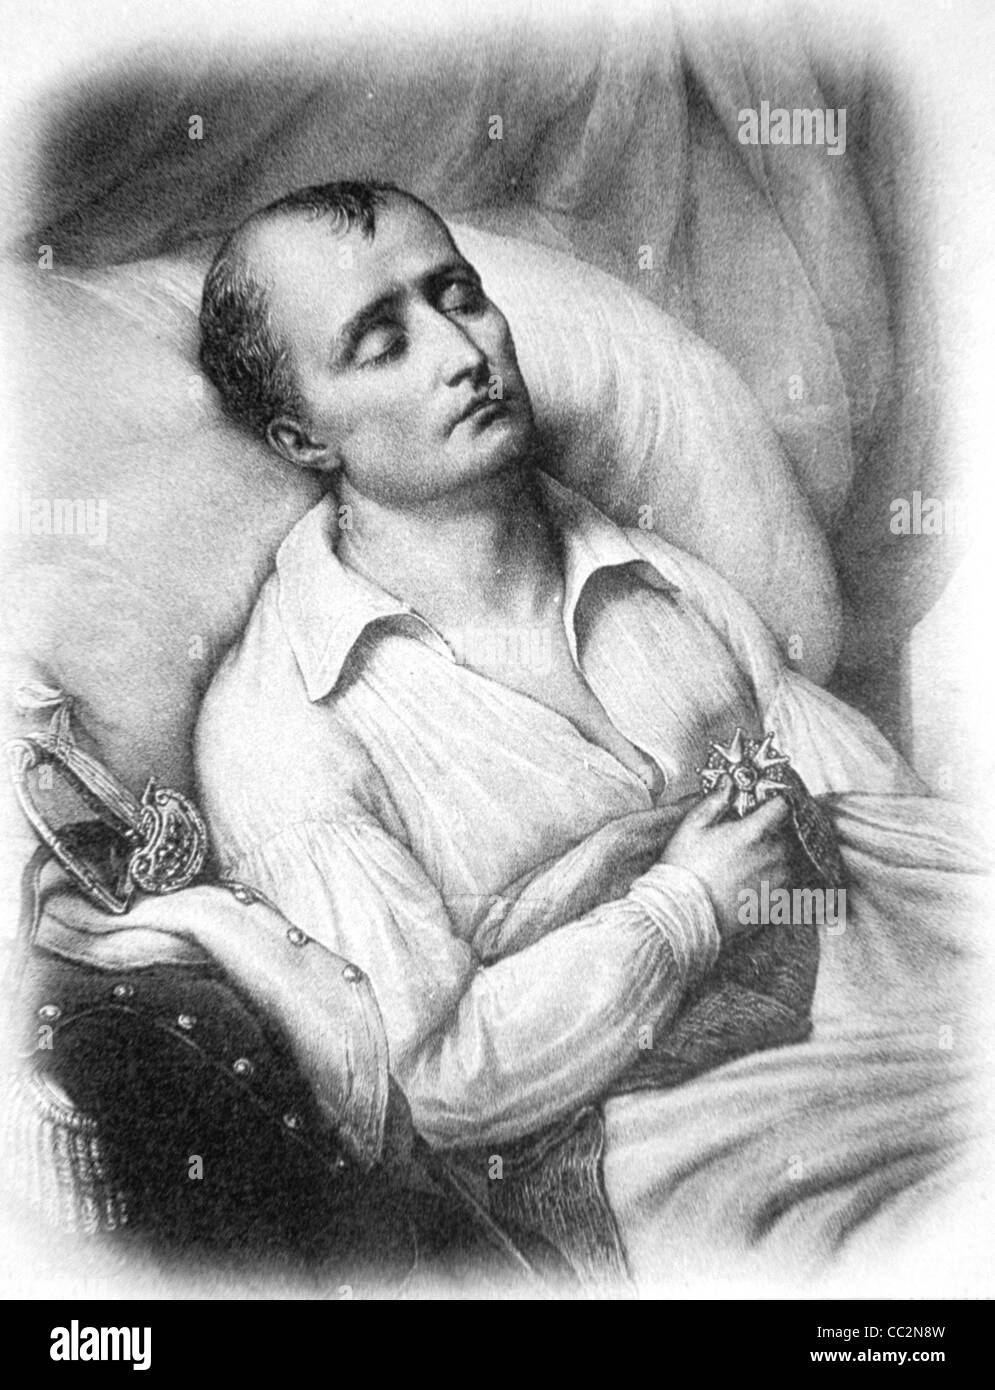 Porträt von Kaiser Napoleon Bonaparte auf seinem Totenbett, c19th Gravur oder Illustration Stockfoto